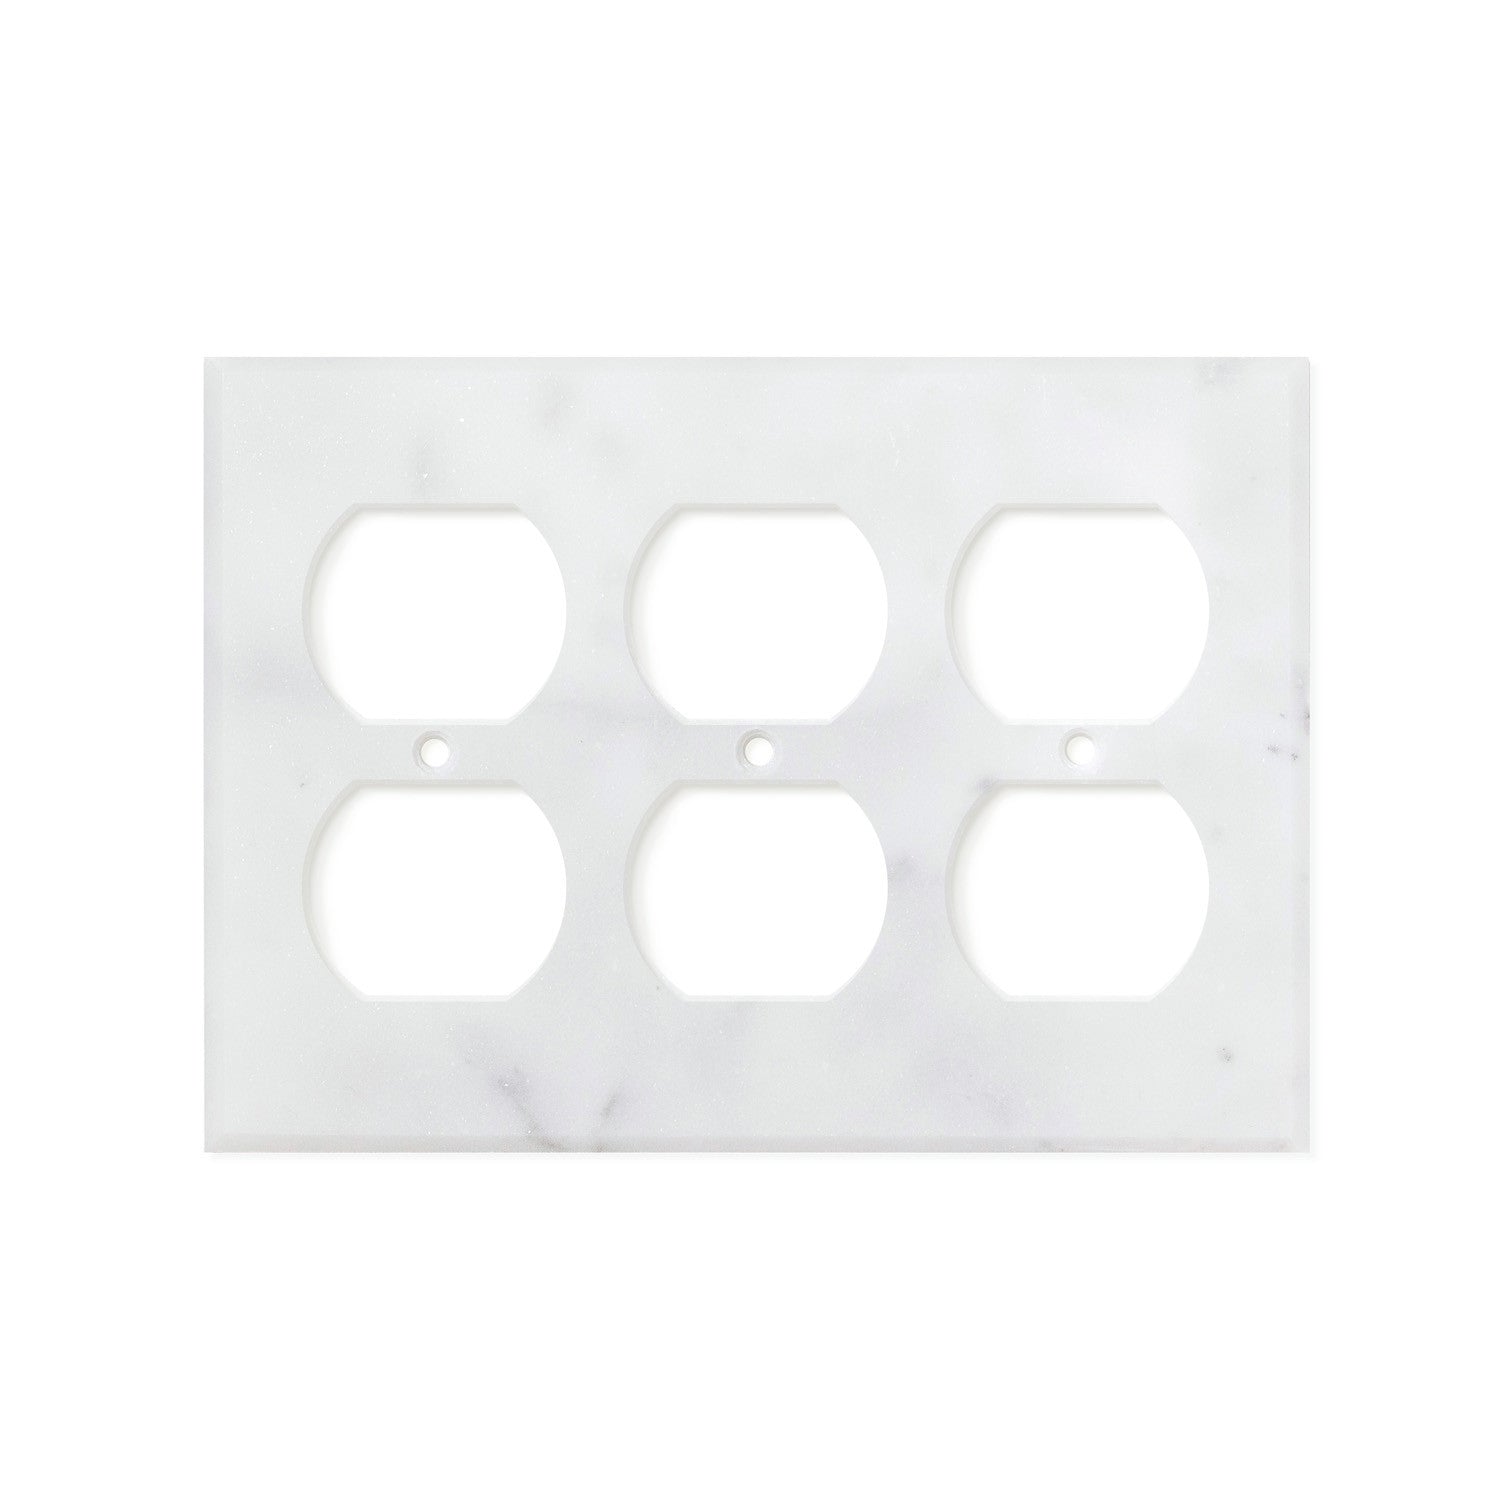 Bianco Carrara (Carrara White) Marble Switch Plate Cover, Honed (3 DUPLEX) - Tilephile